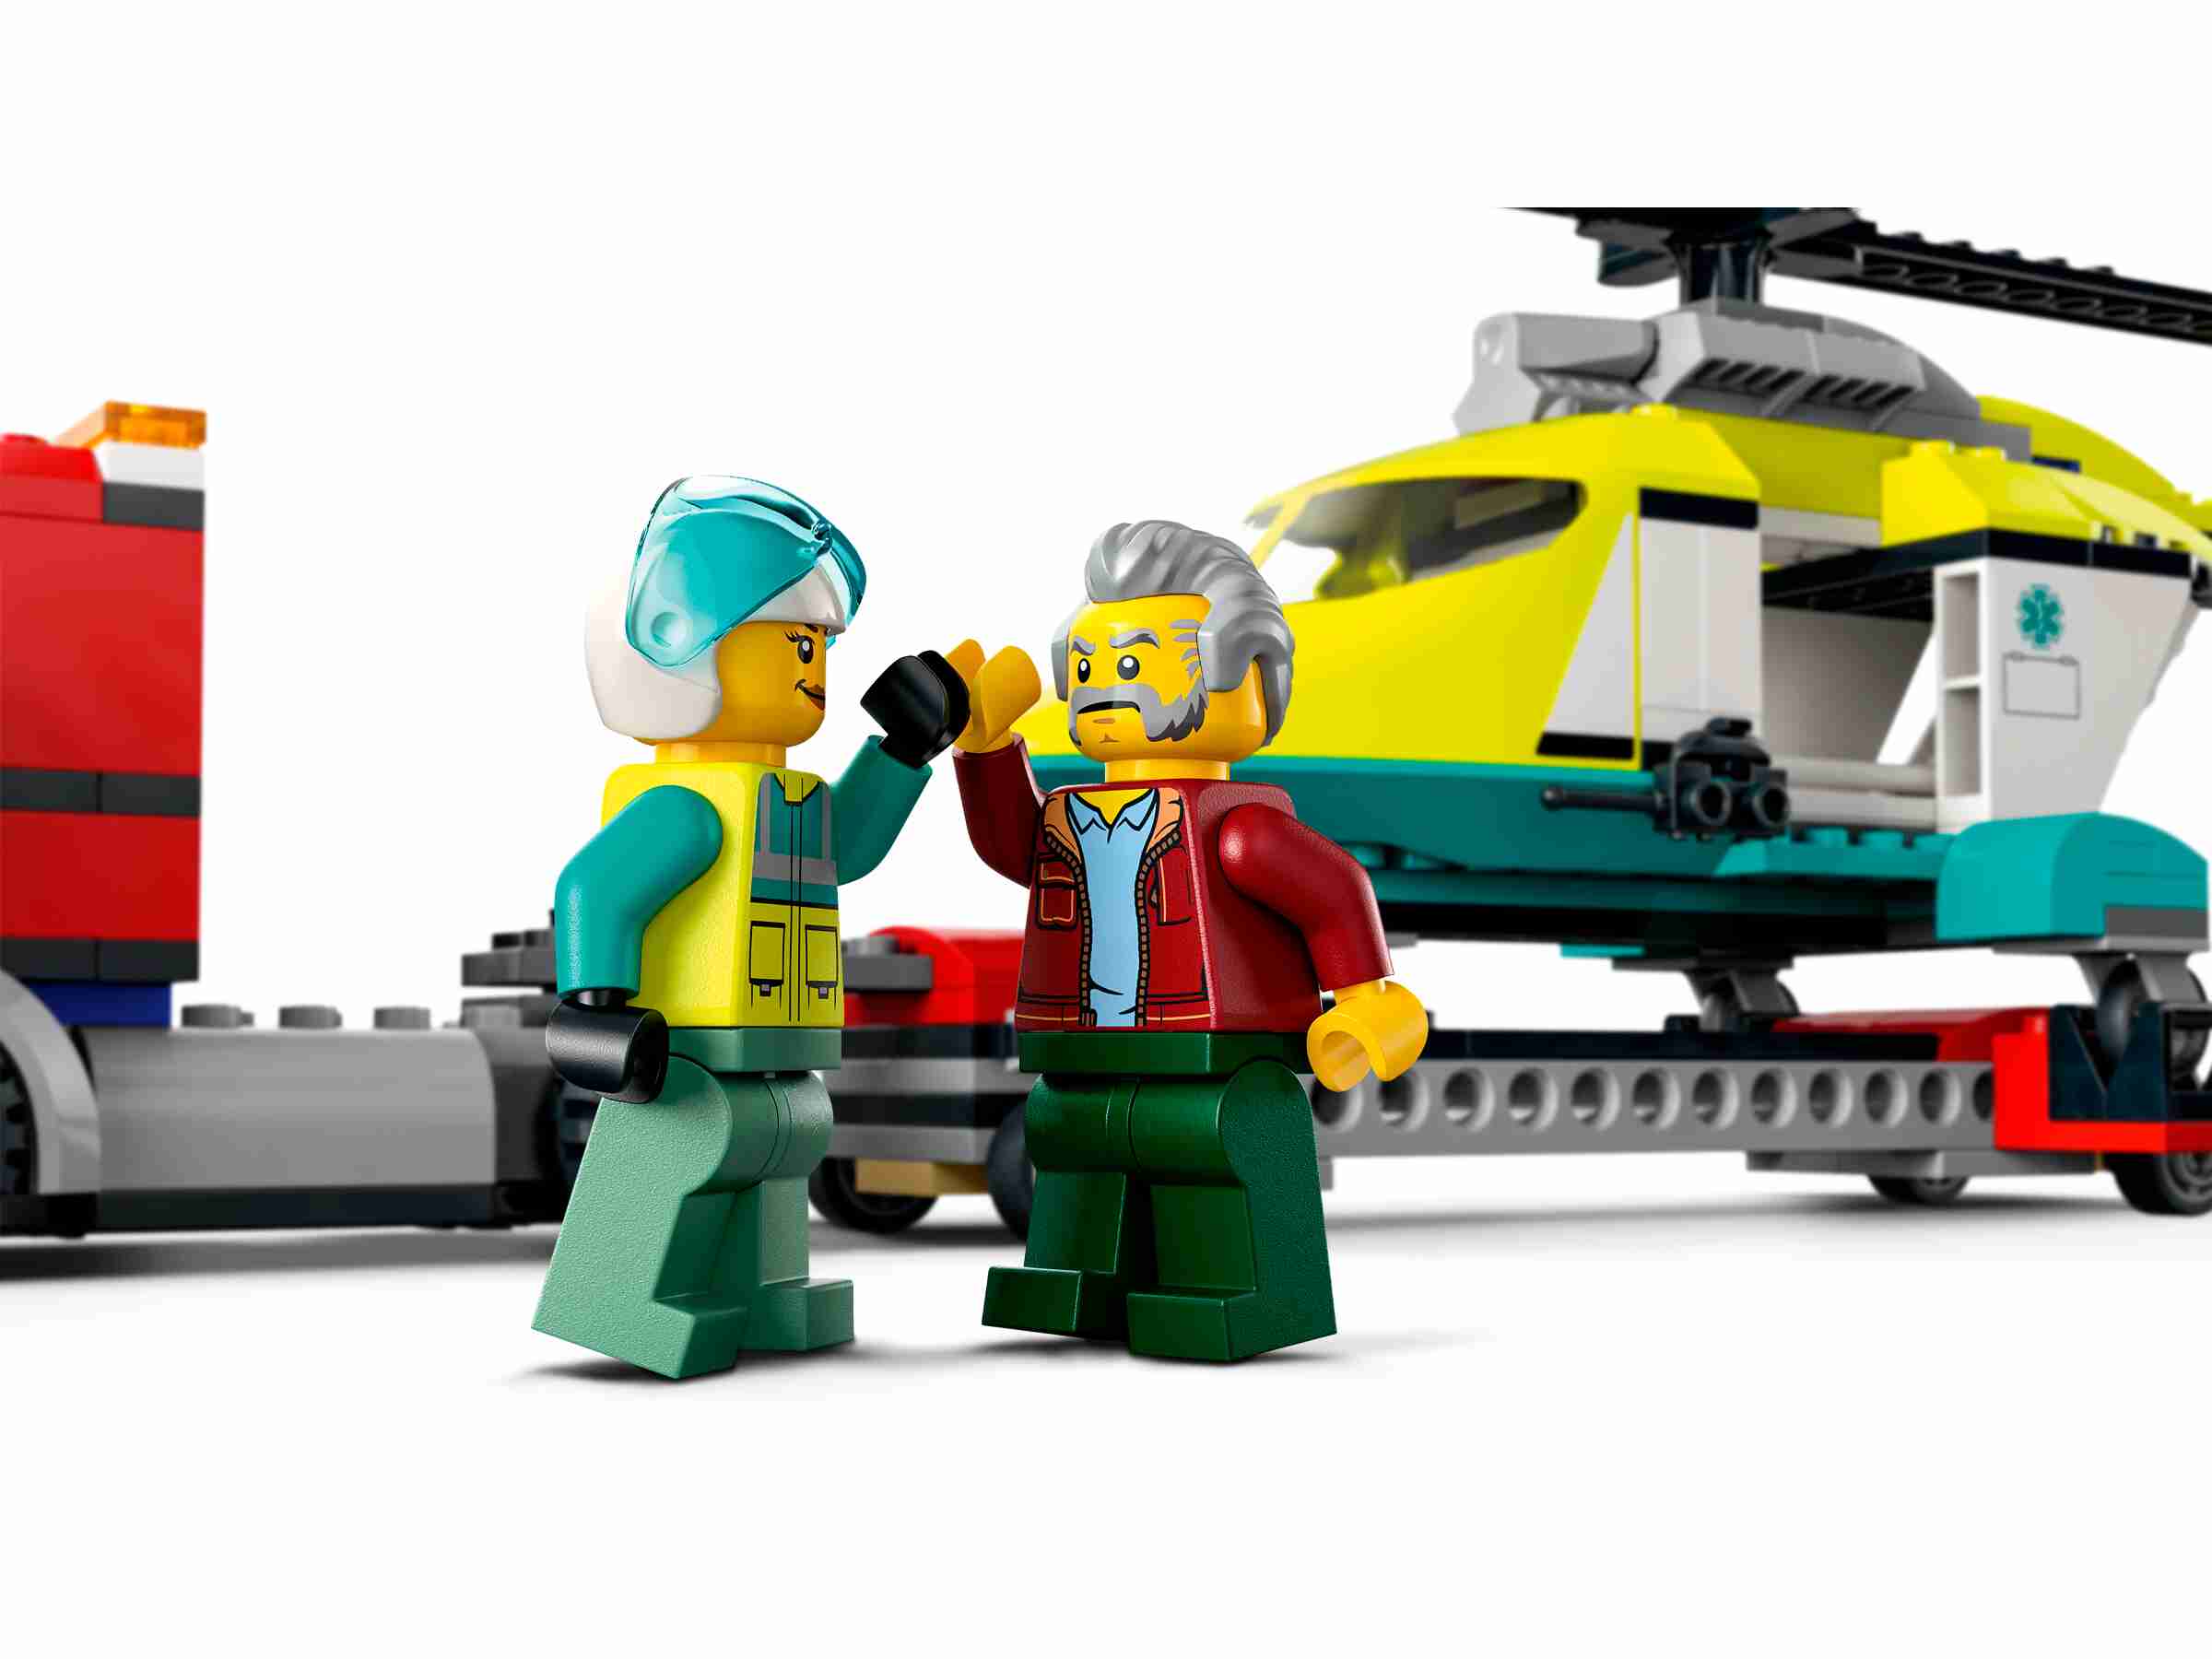 LEGO 60343 City Hubschrauber Transporter, LKW, Rettungshubschrauber, Minifiguren